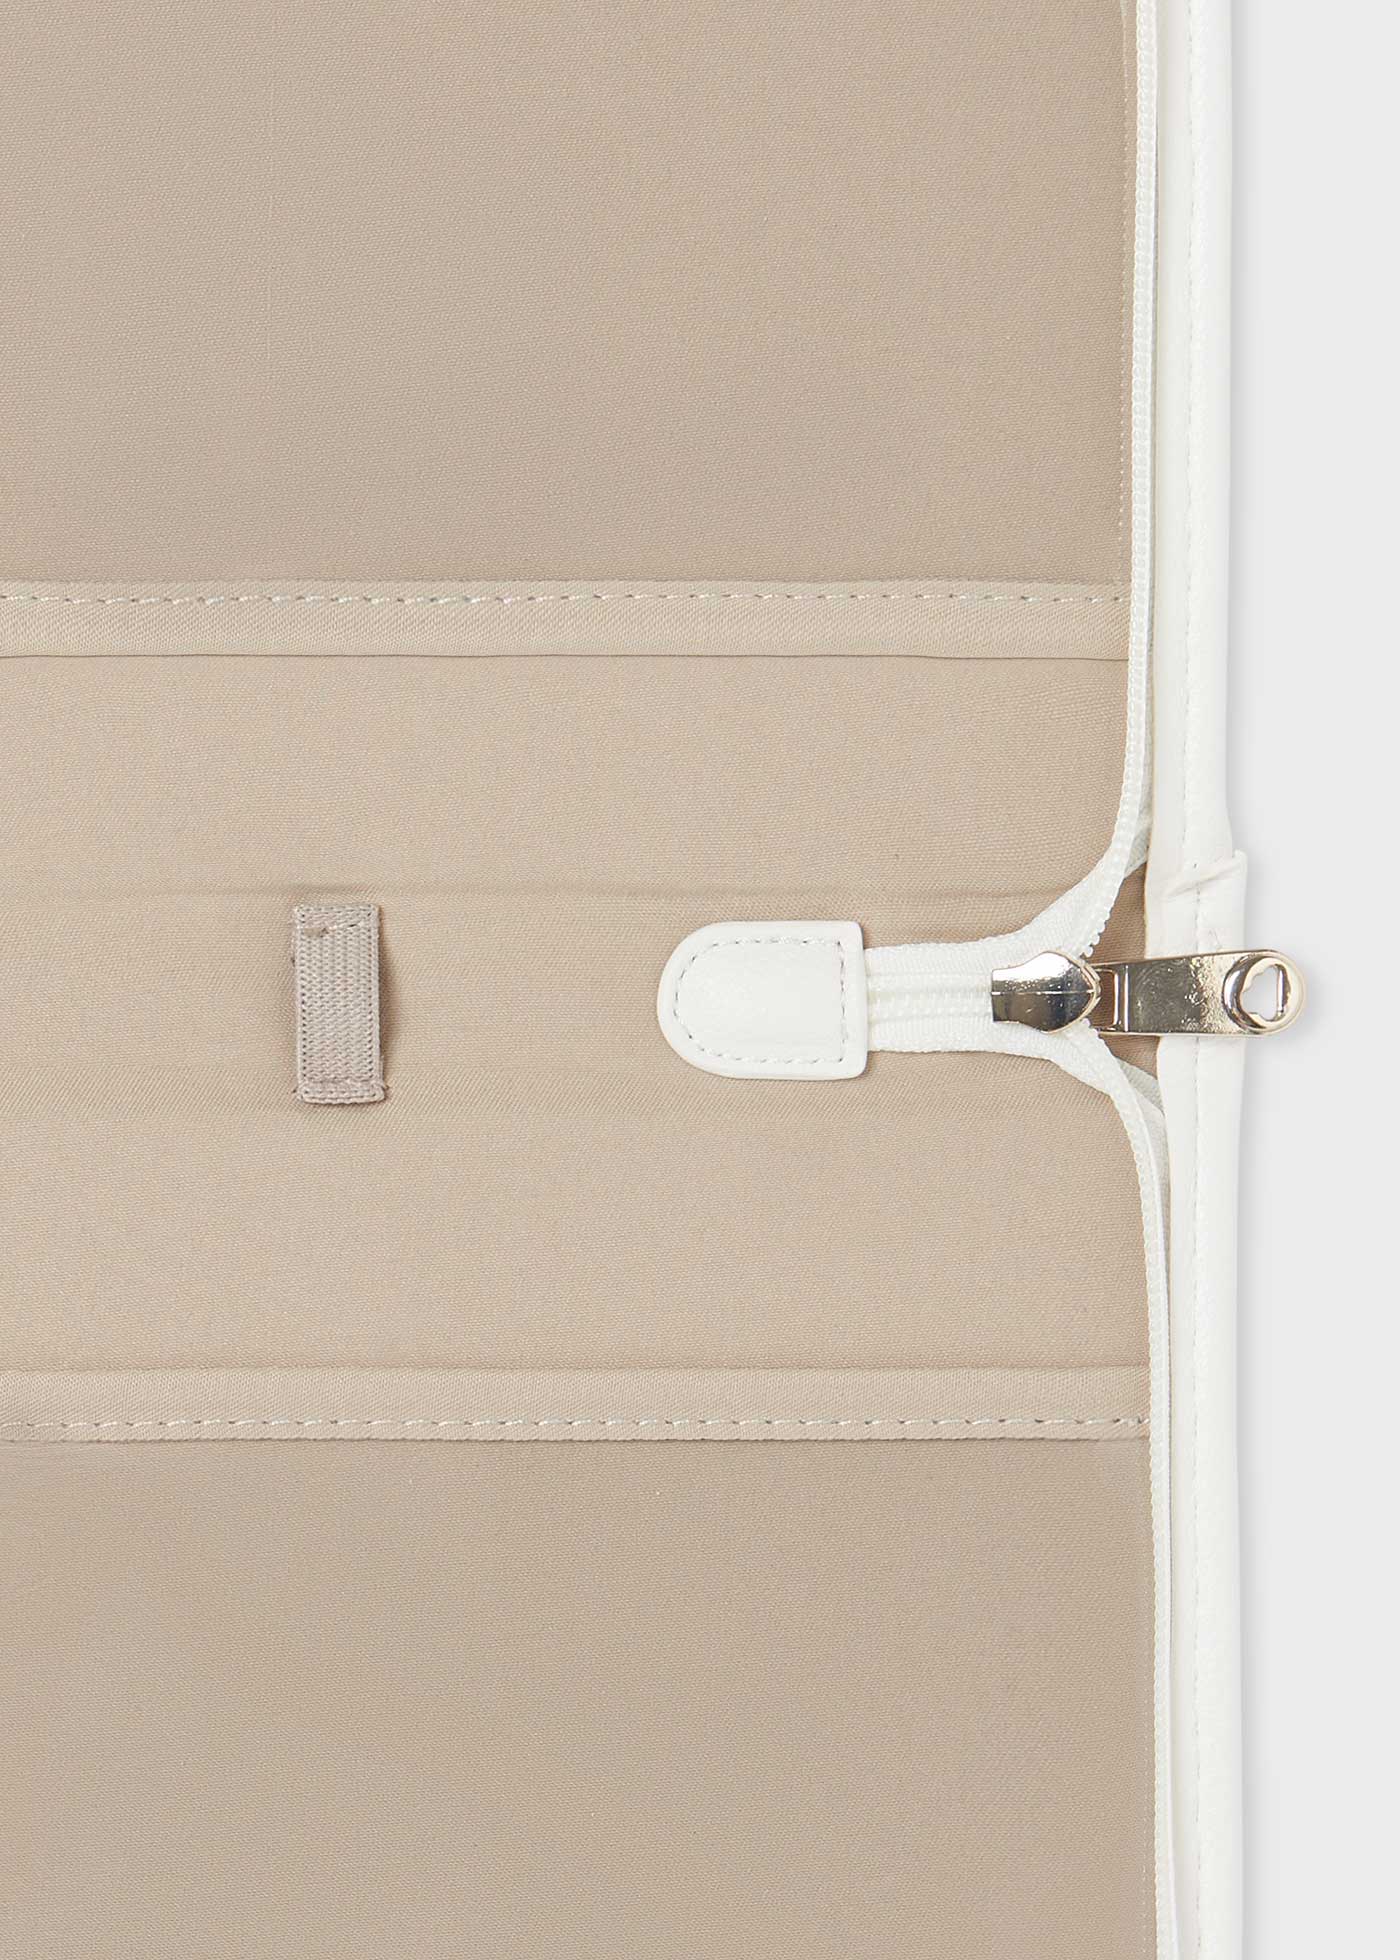 Louis Vuitton XL Monogram Folder Portfolio Document Clutch Porte